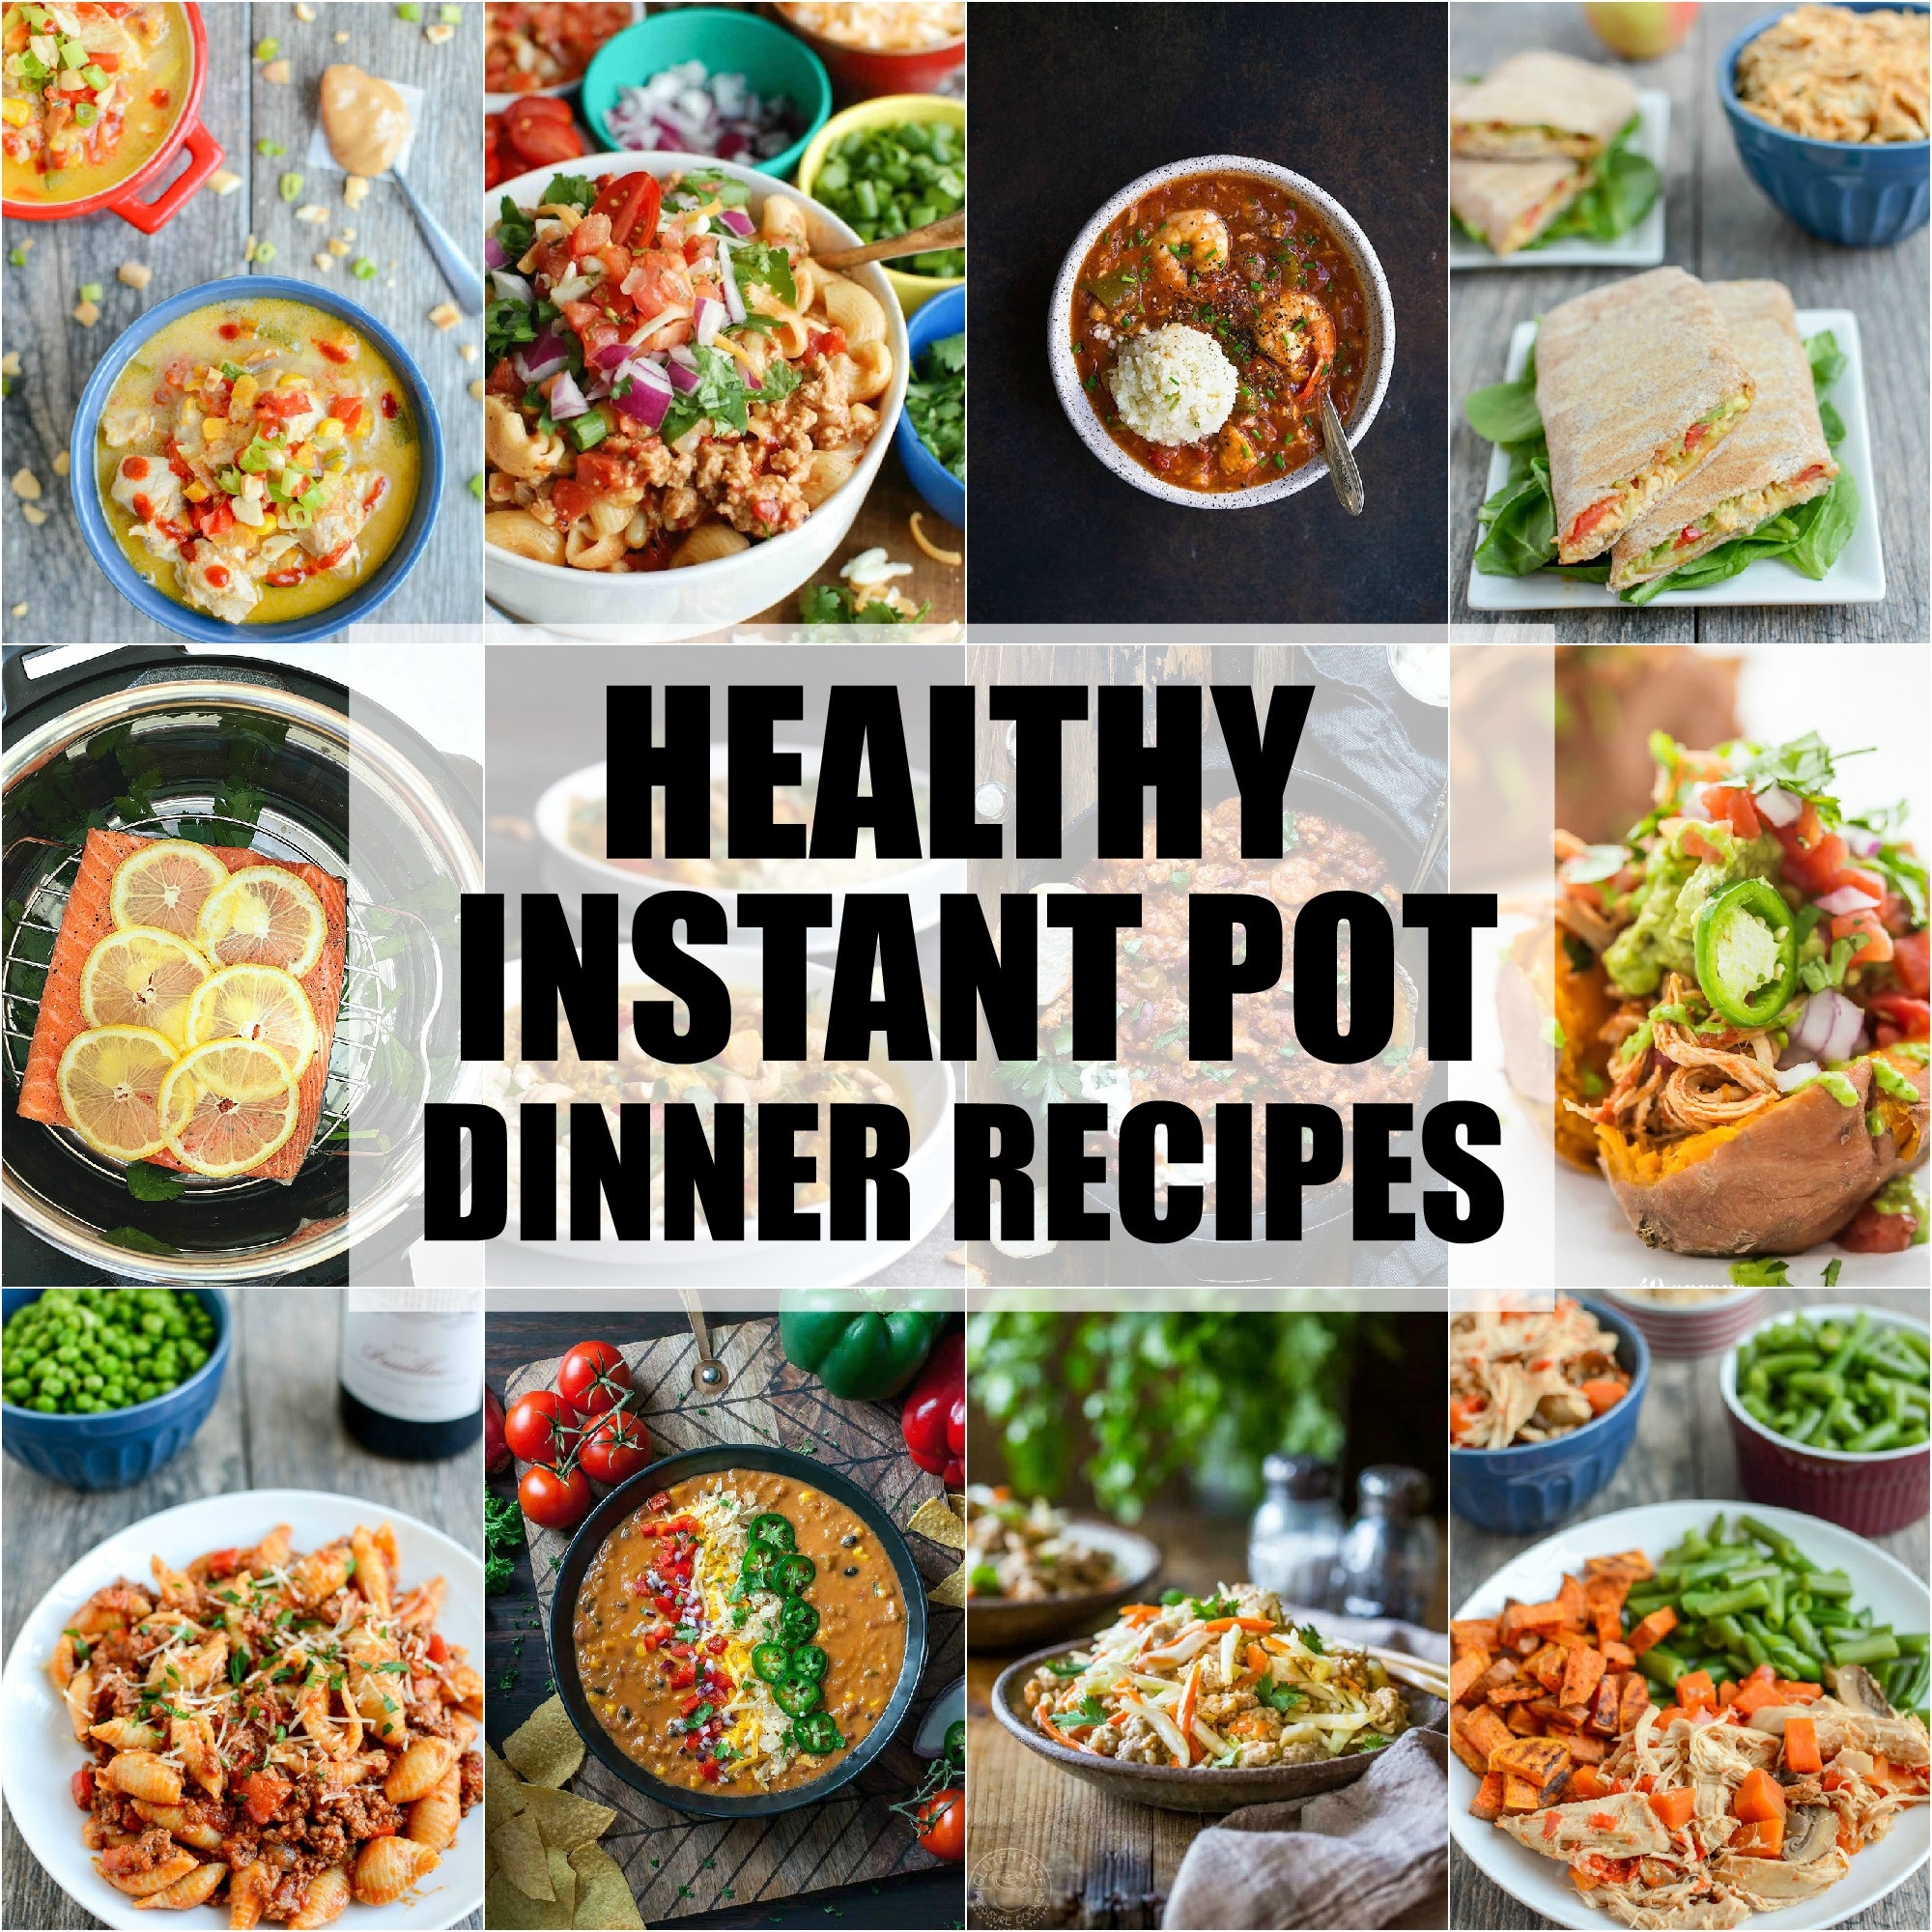 Healthy Recipes For Instant Pot
 Healthy Instant Pot Dinner Recipes